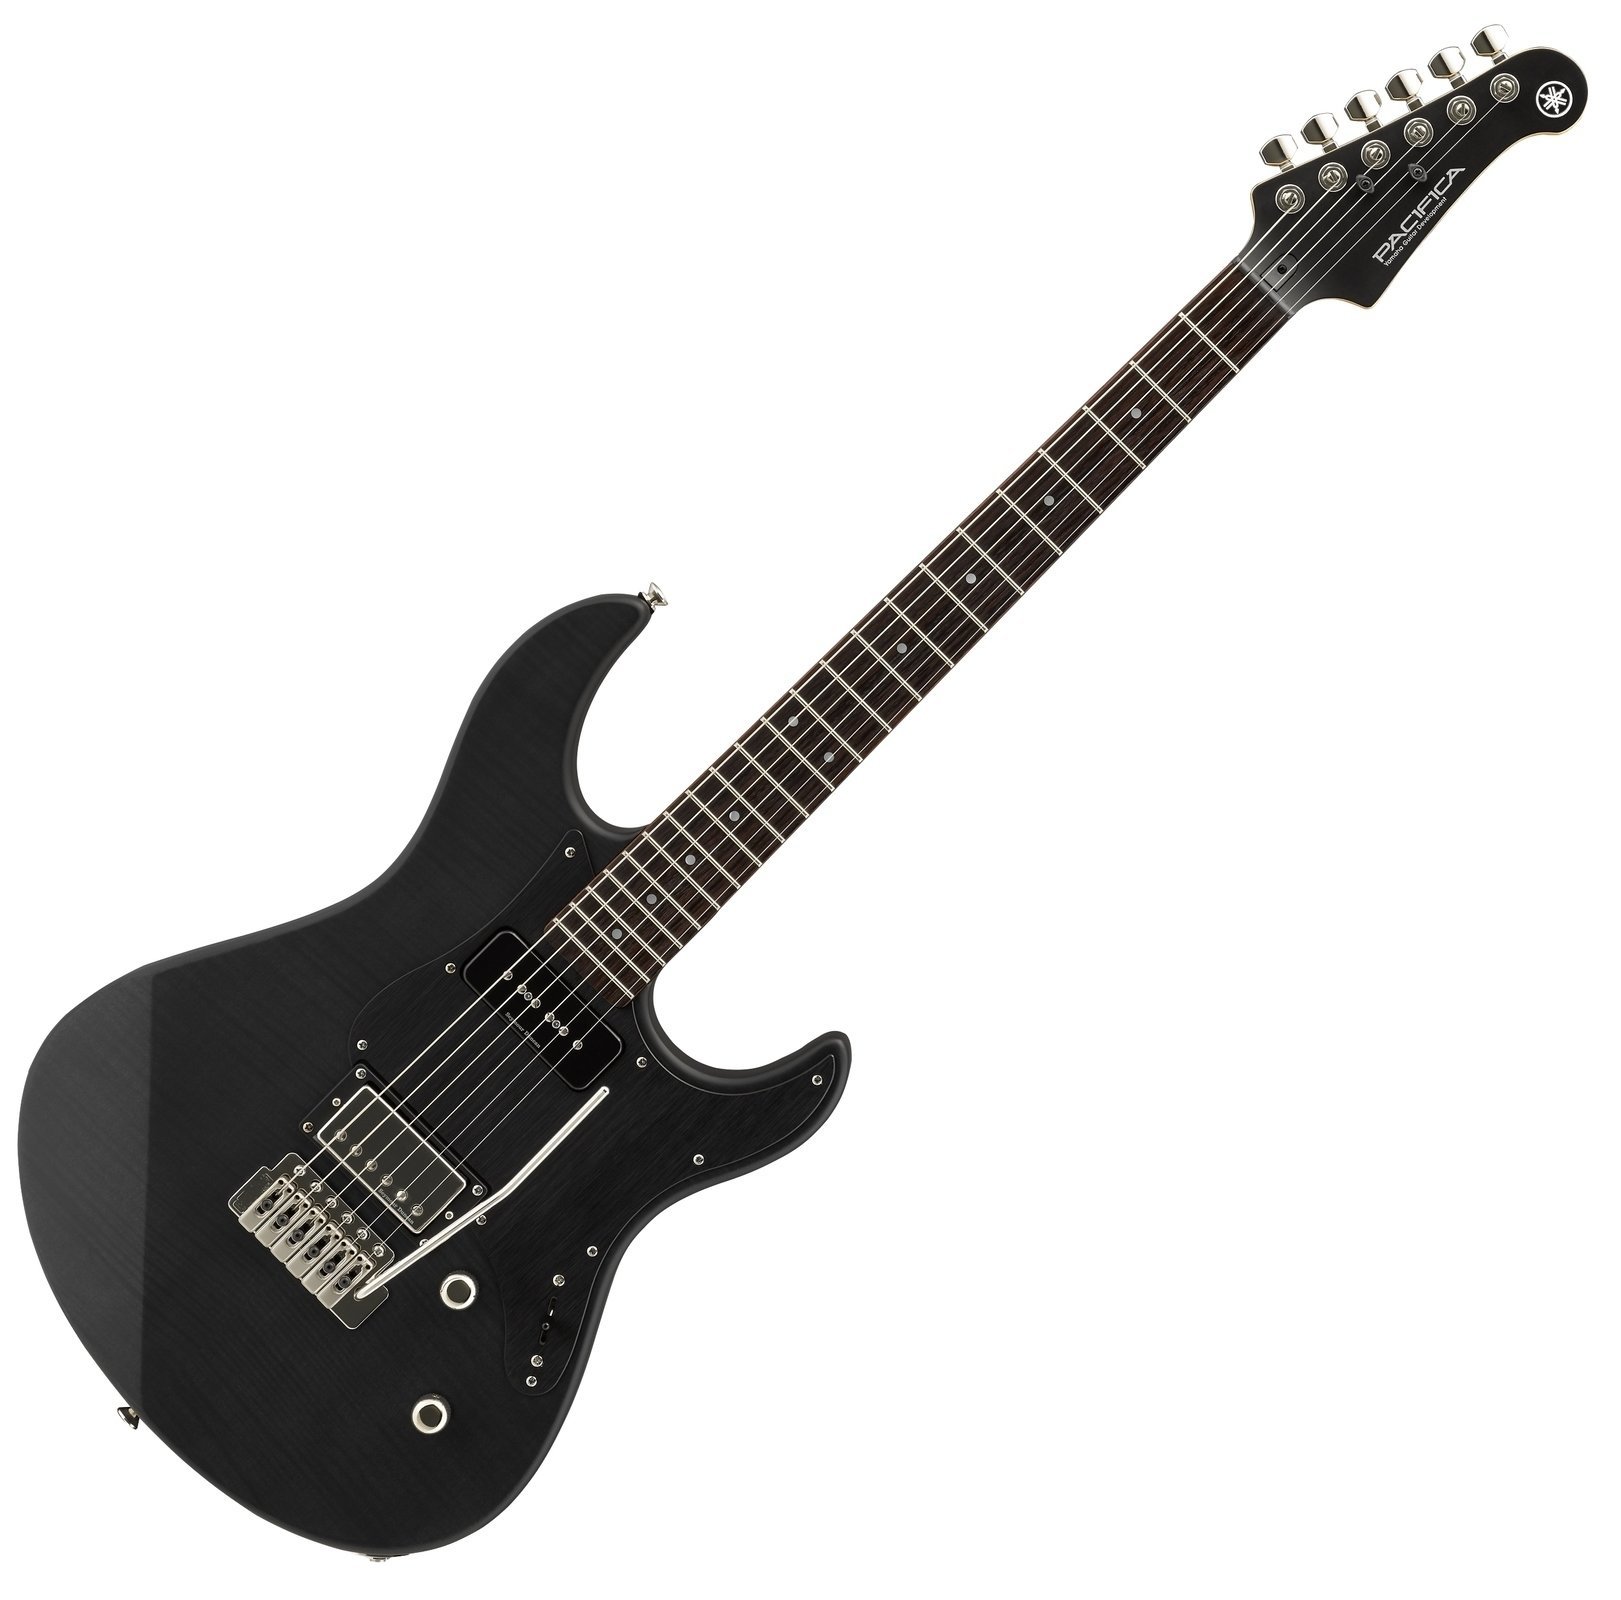 Elektrisk gitarr Yamaha Pacifica 611VFMX TBL